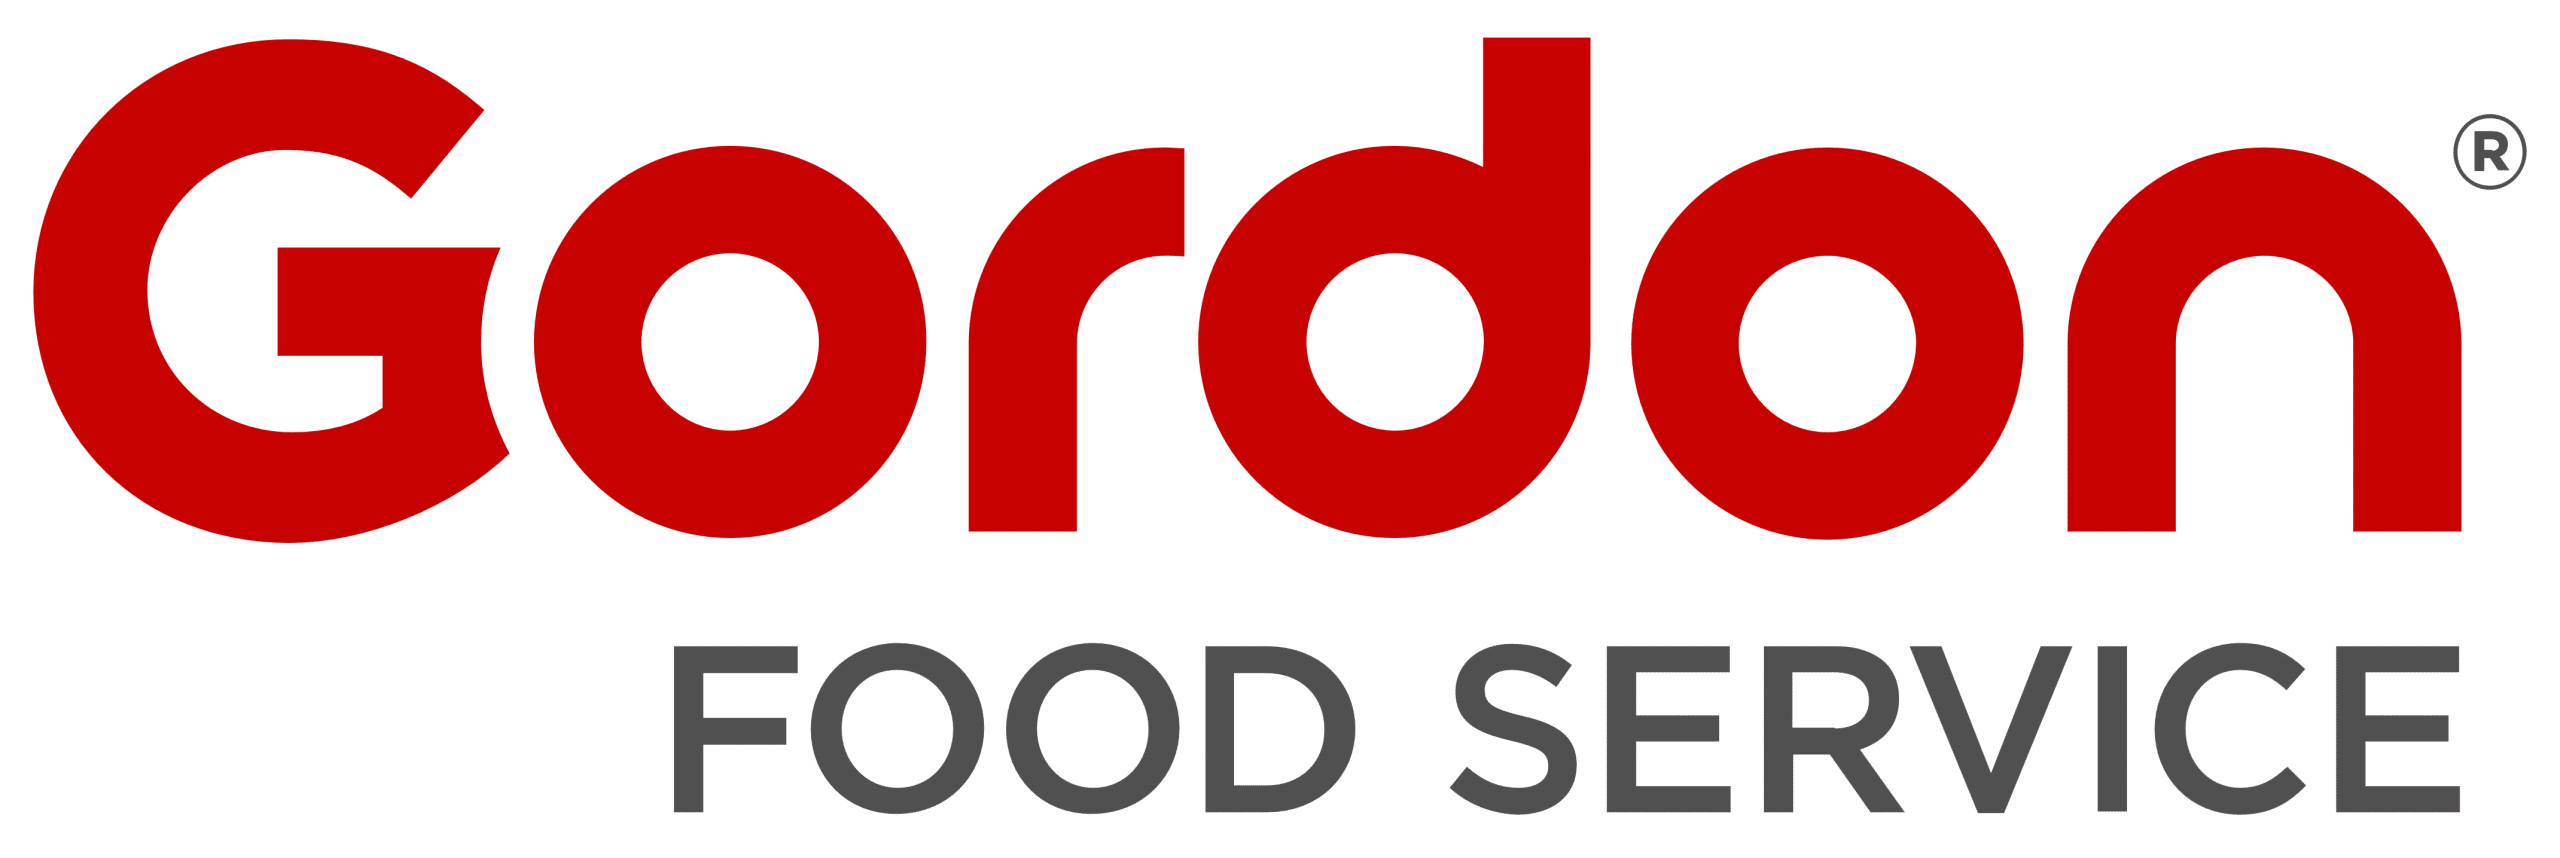 Gordon Foodservice logo